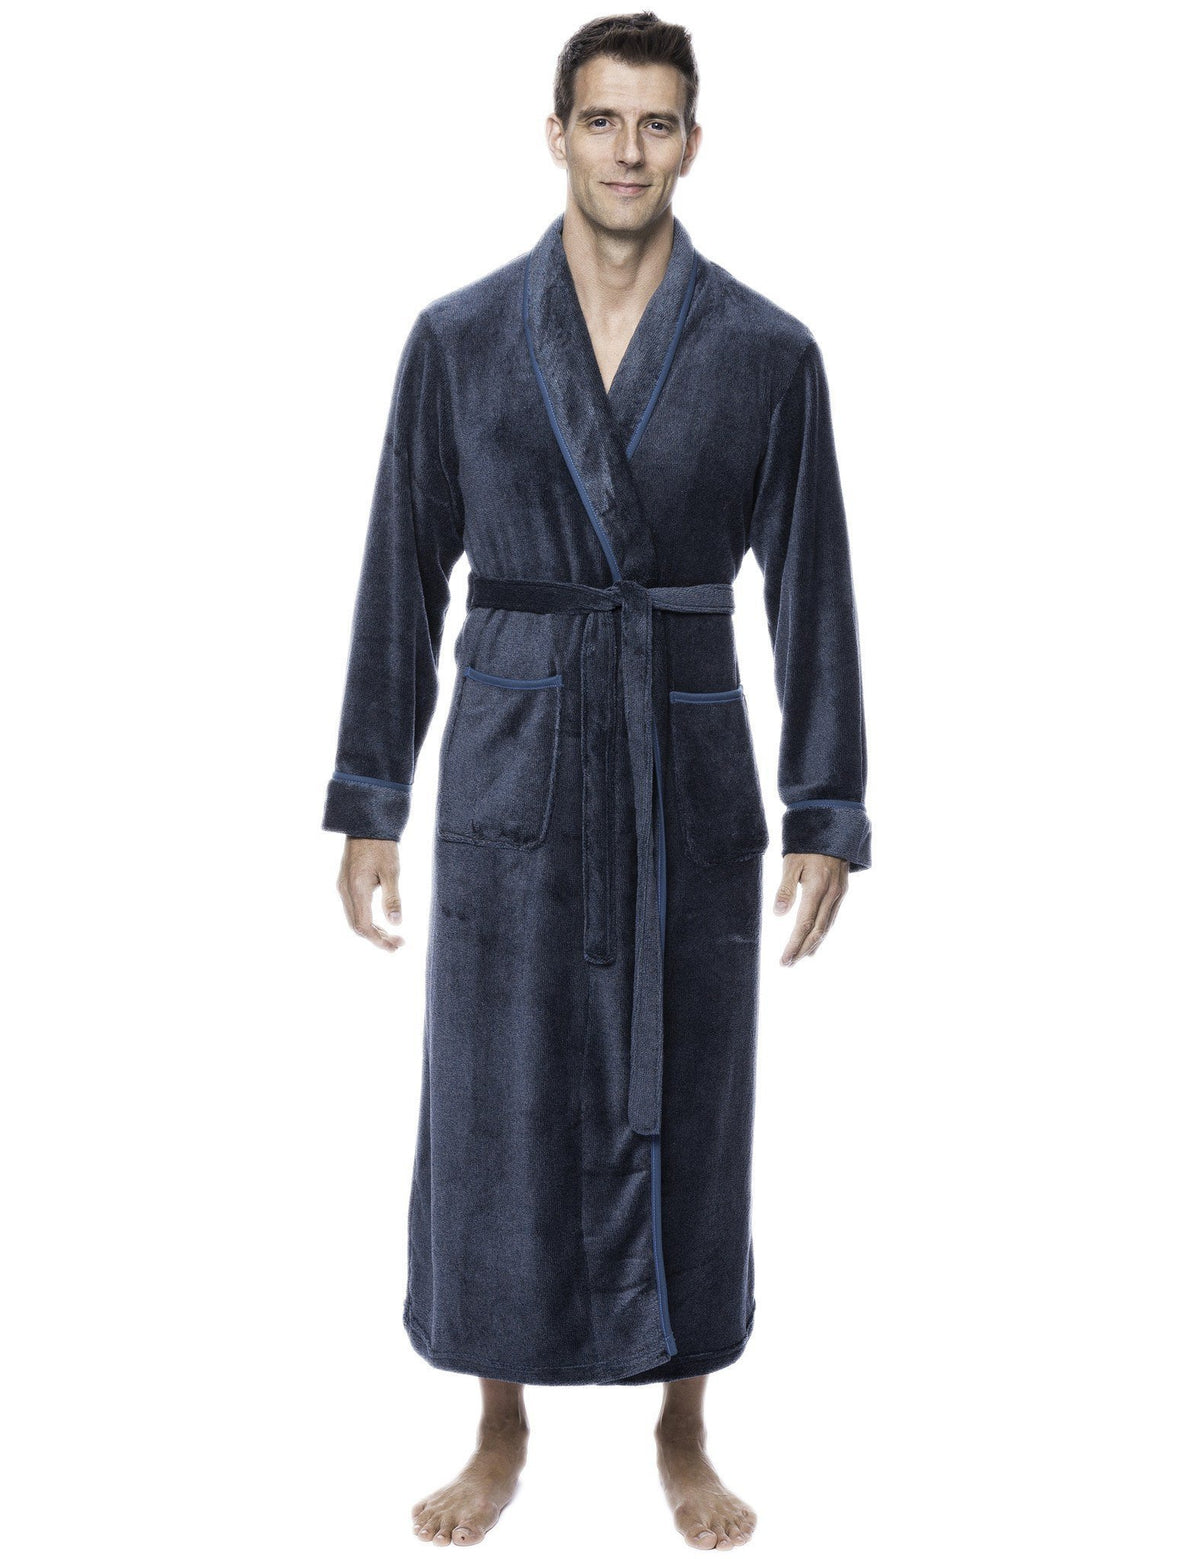 Men's Premium Coral Fleece Full Length Plush Spa/Bath Robe - Marl Teal/Grey